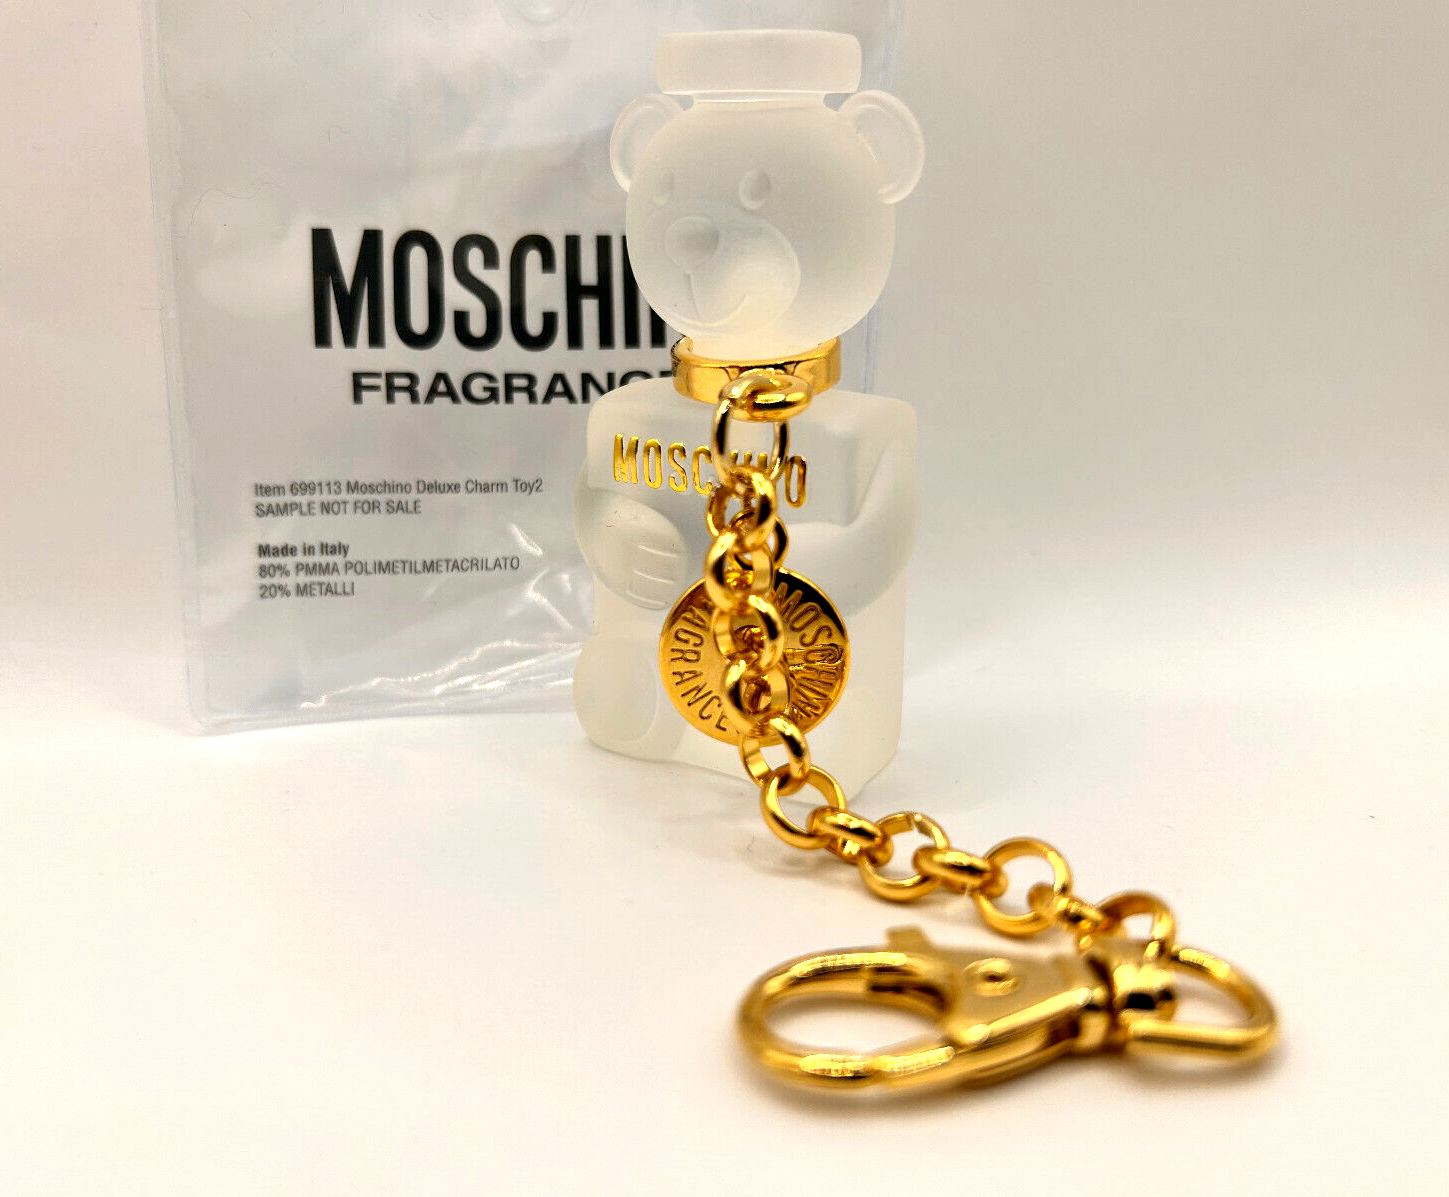 Moschino Fragrances Toy 2 keychain bag charm teddy bear perfume ...